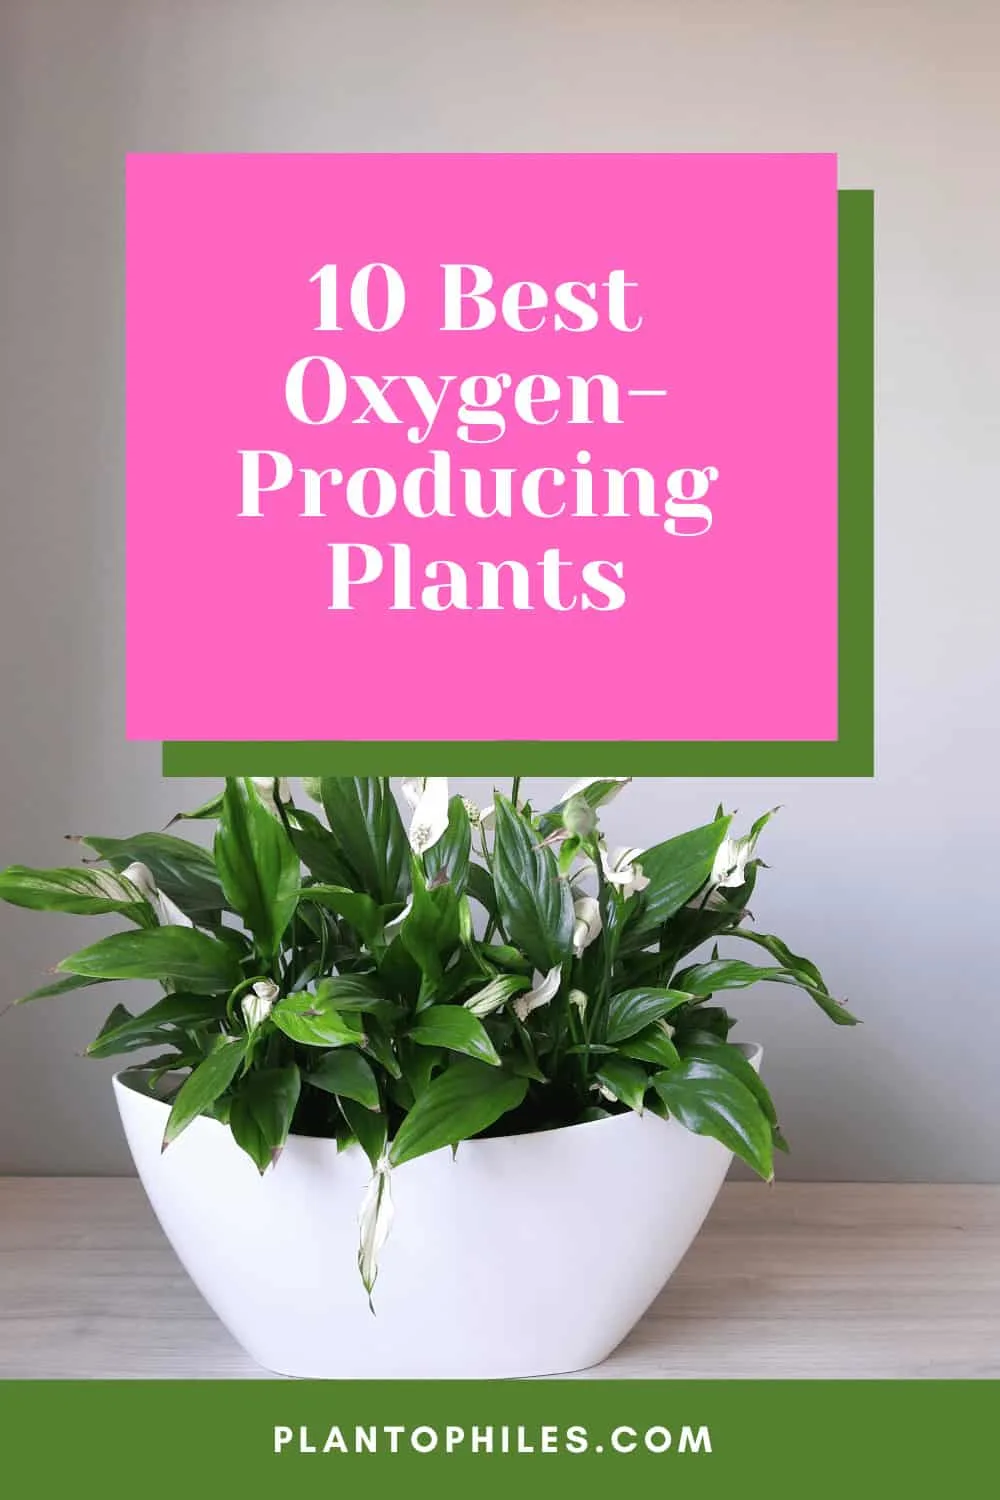 10 Best Oxygen-Producing Plants